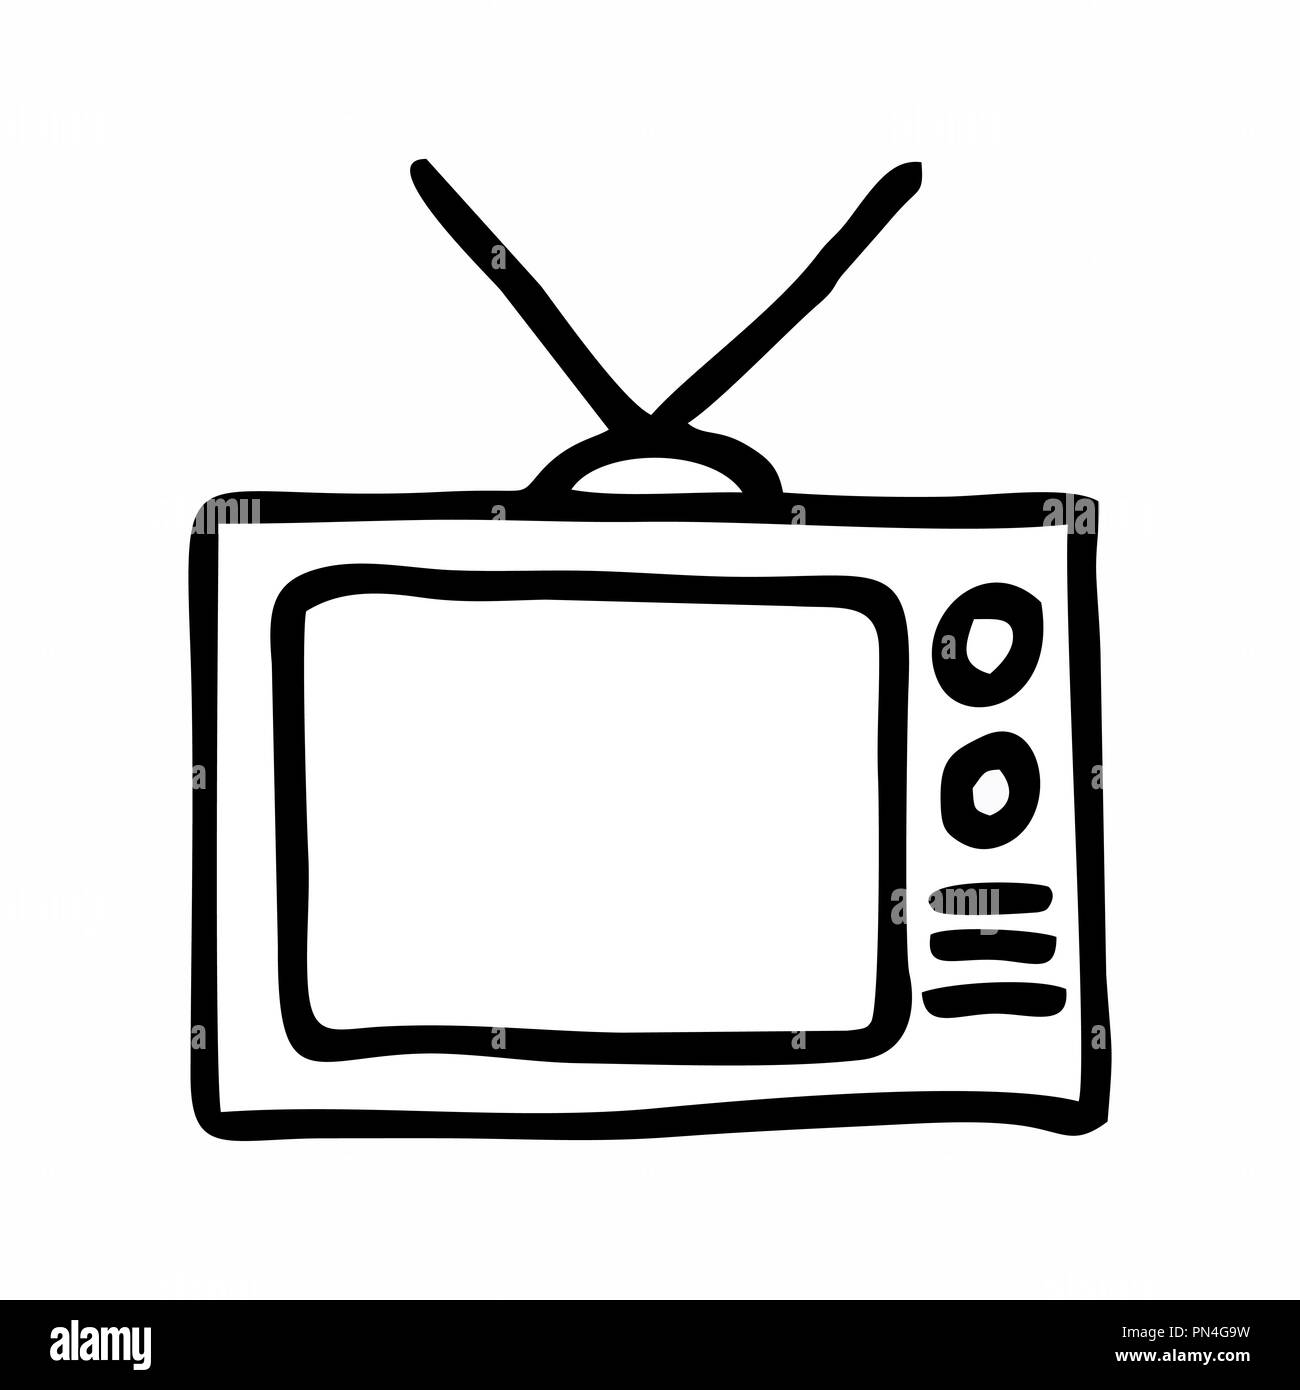 Simple TV illustration Stock Vector